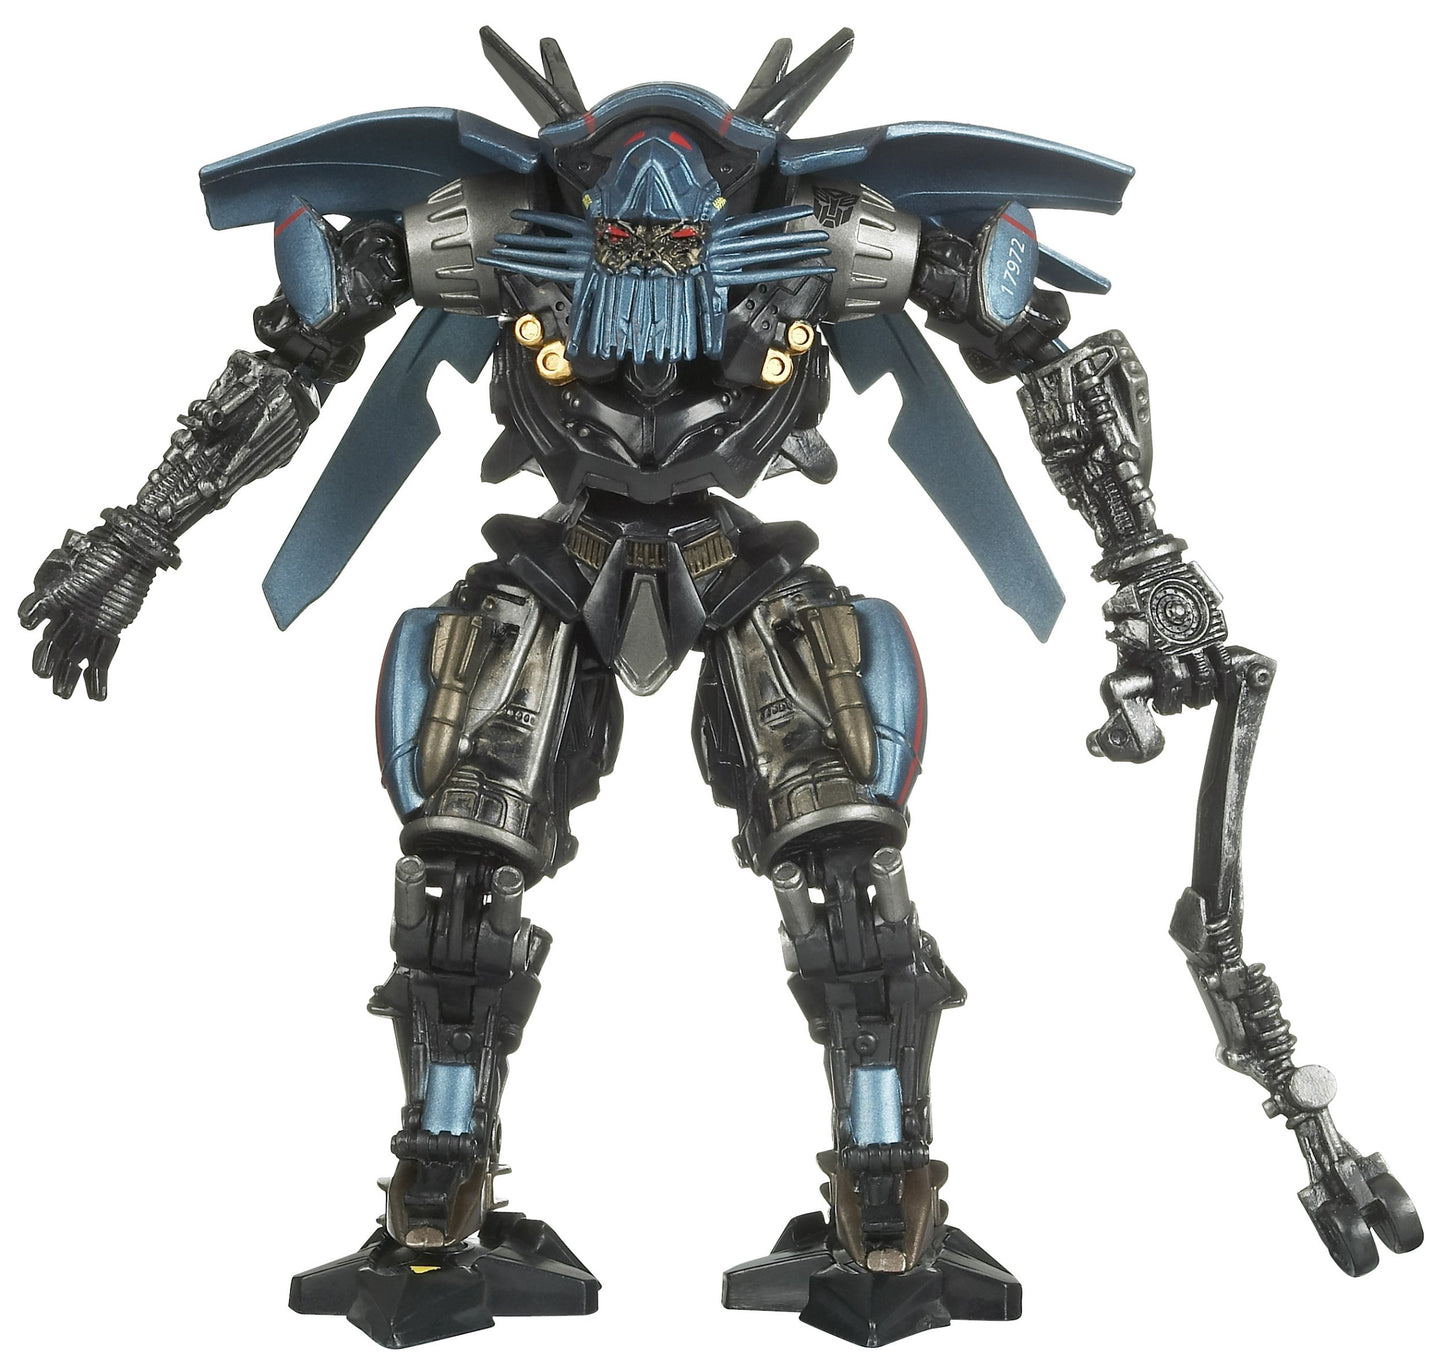 Transformers Revenge of The Fallen Robot Replicas Jetfire